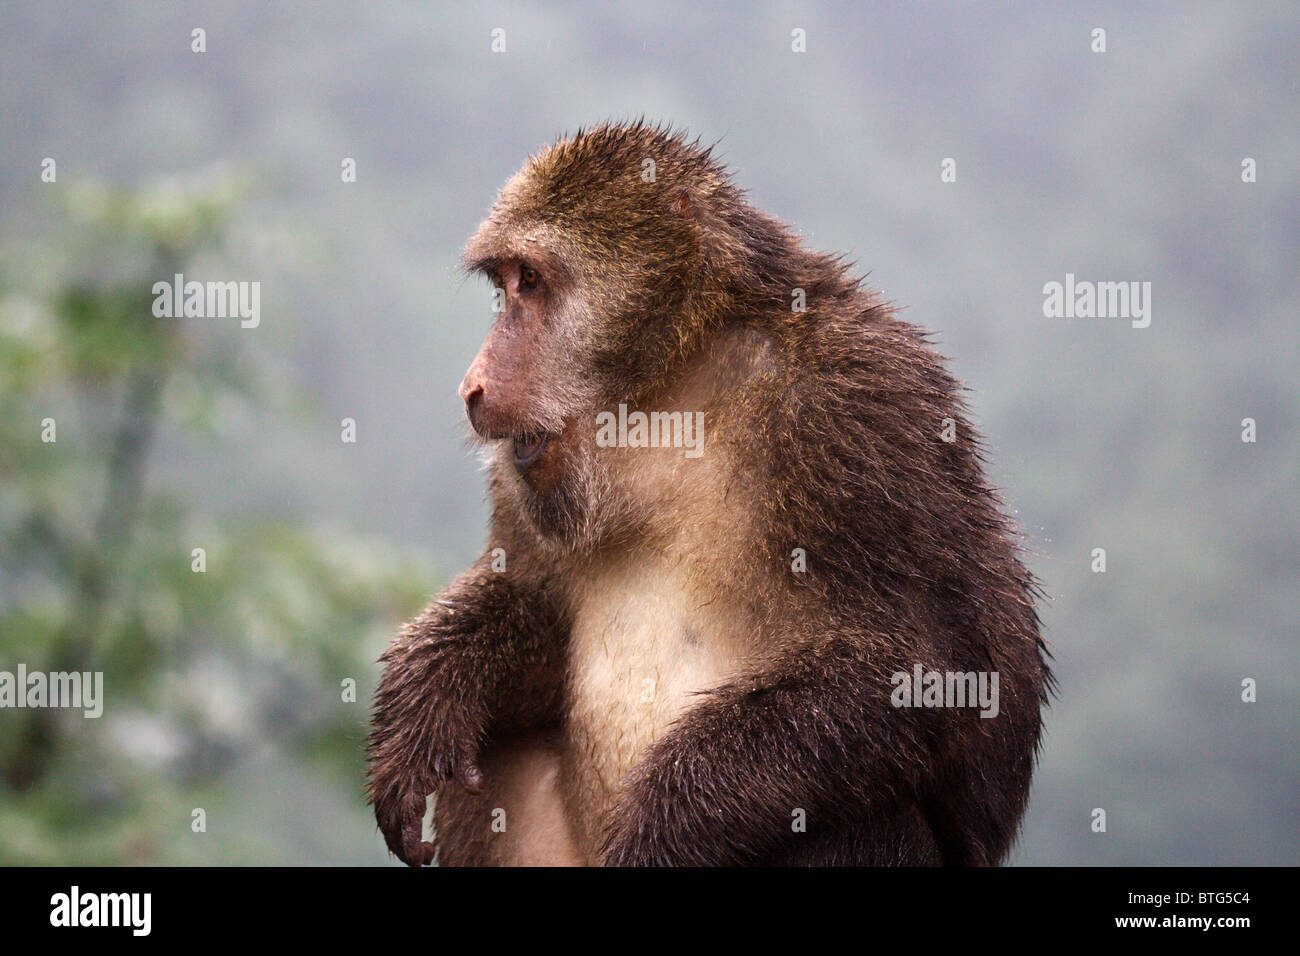 Monkey in the rain - Emei Shan, China Stock Photo